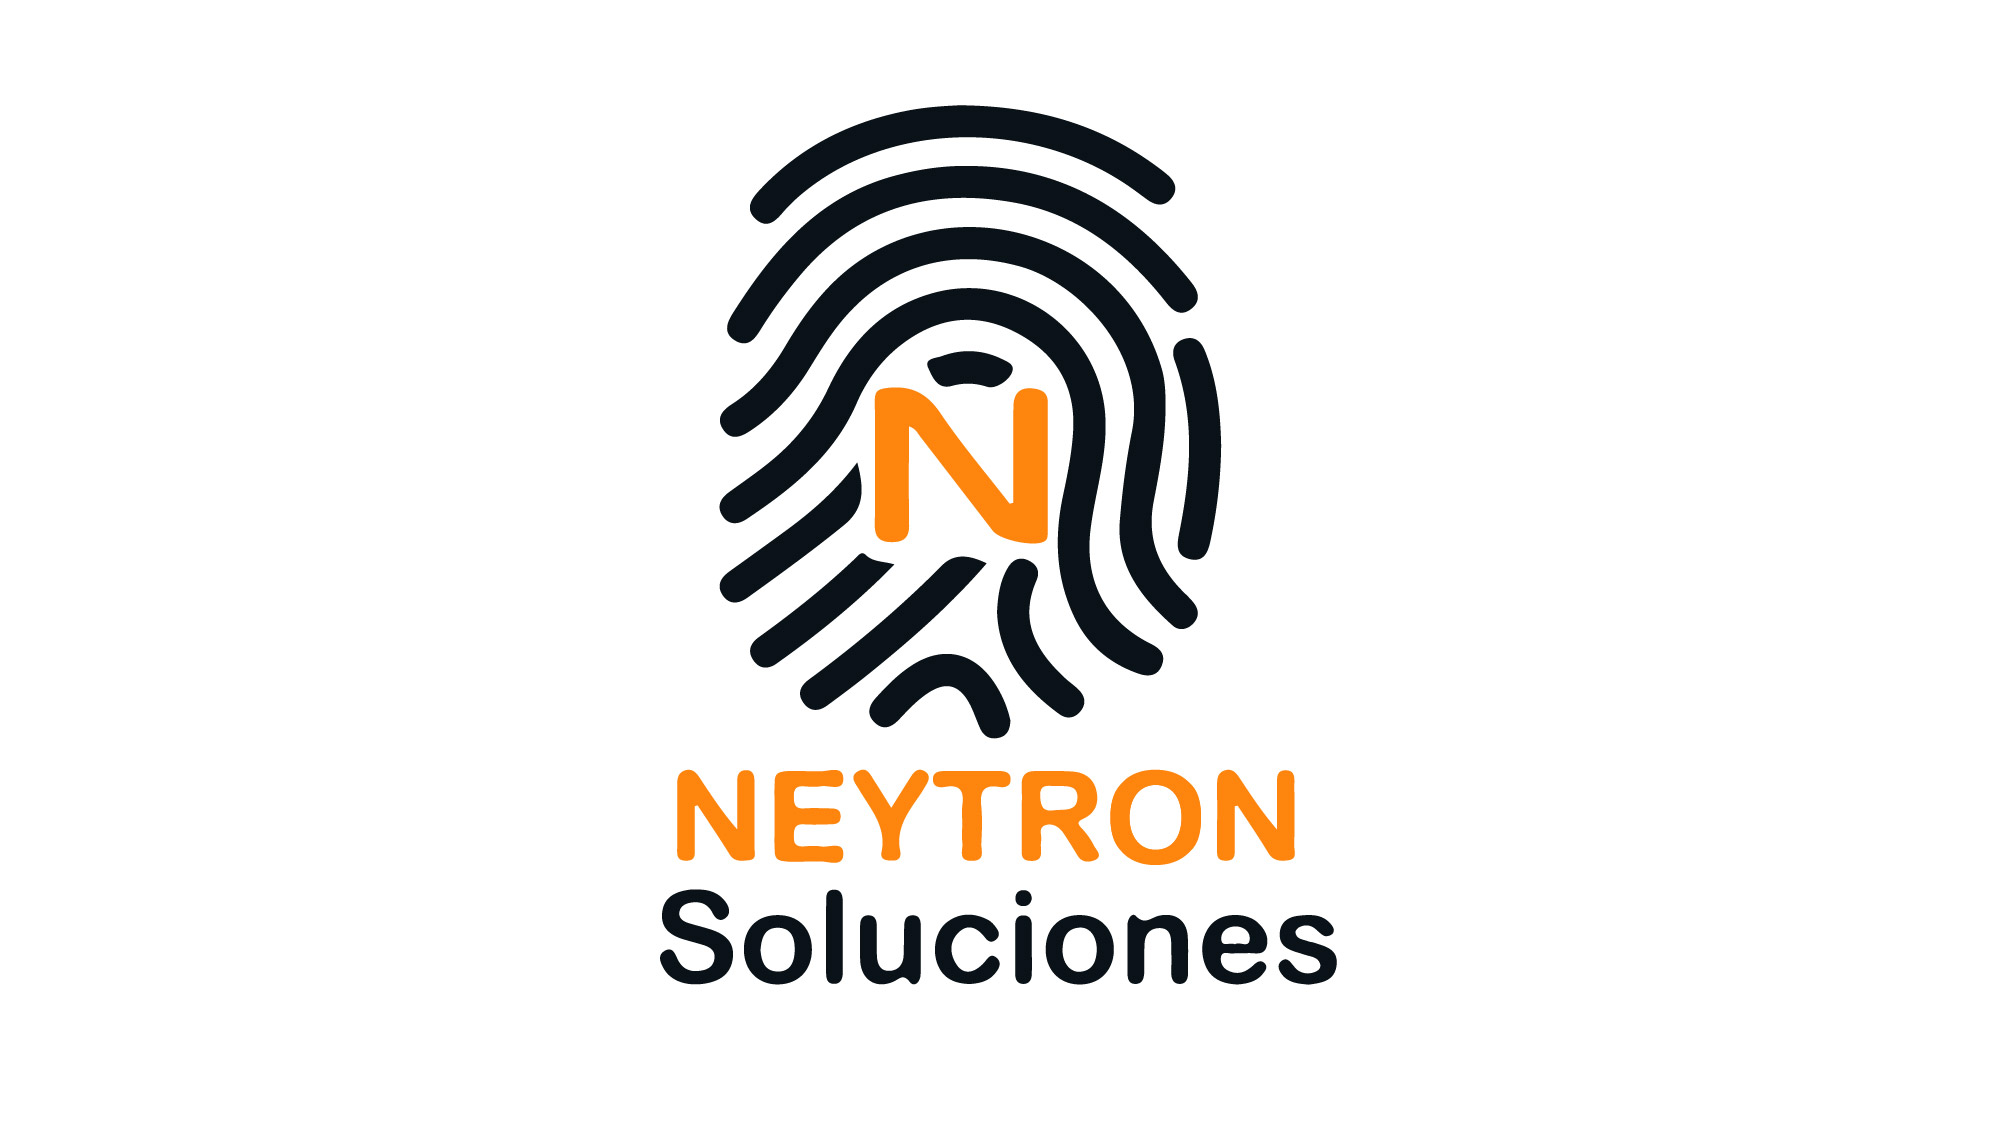 Neytron